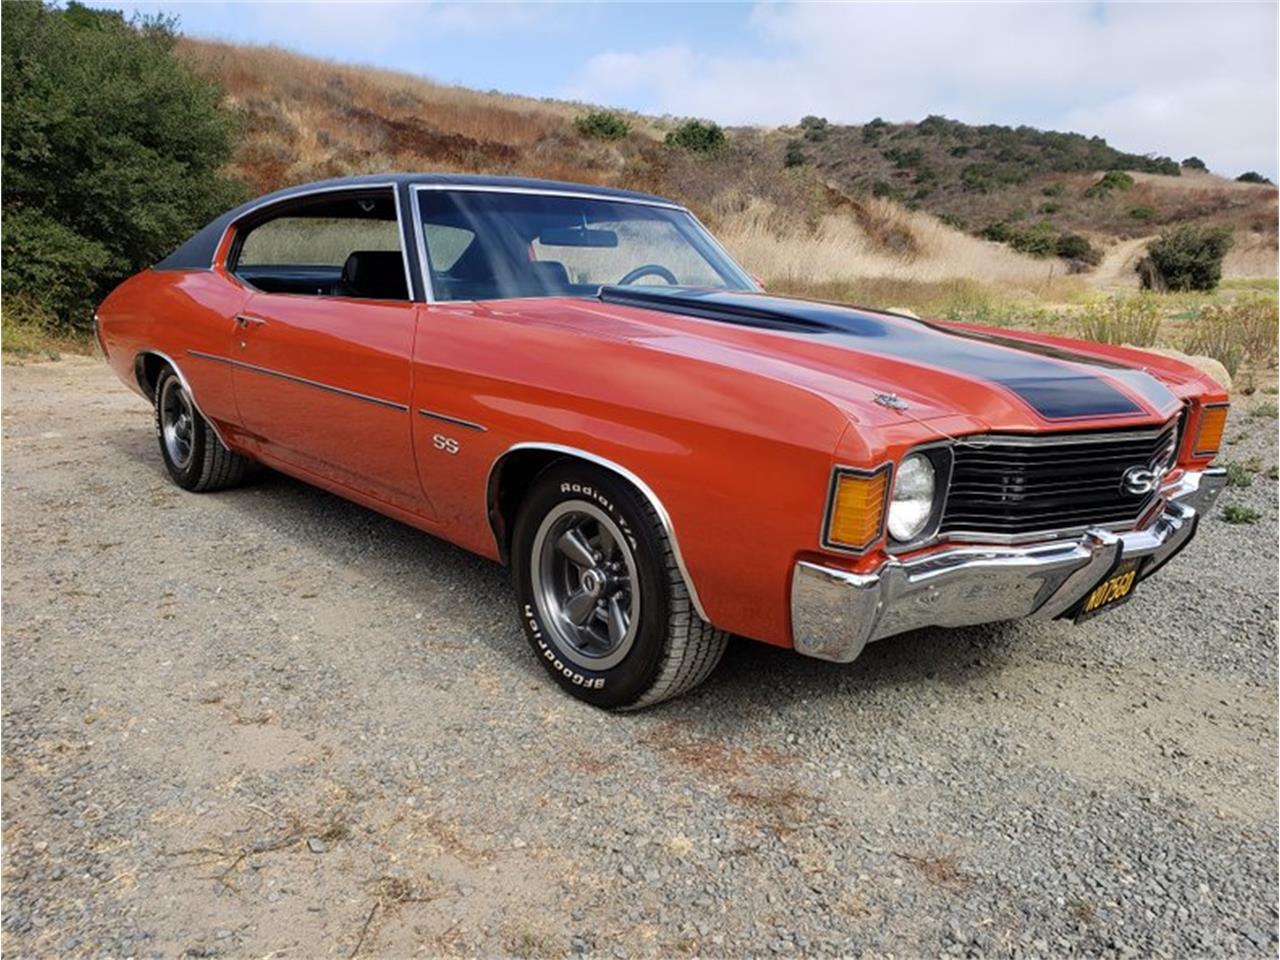 For Sale: 1972 Chevrolet Chevelle in Laguna Beach, California.